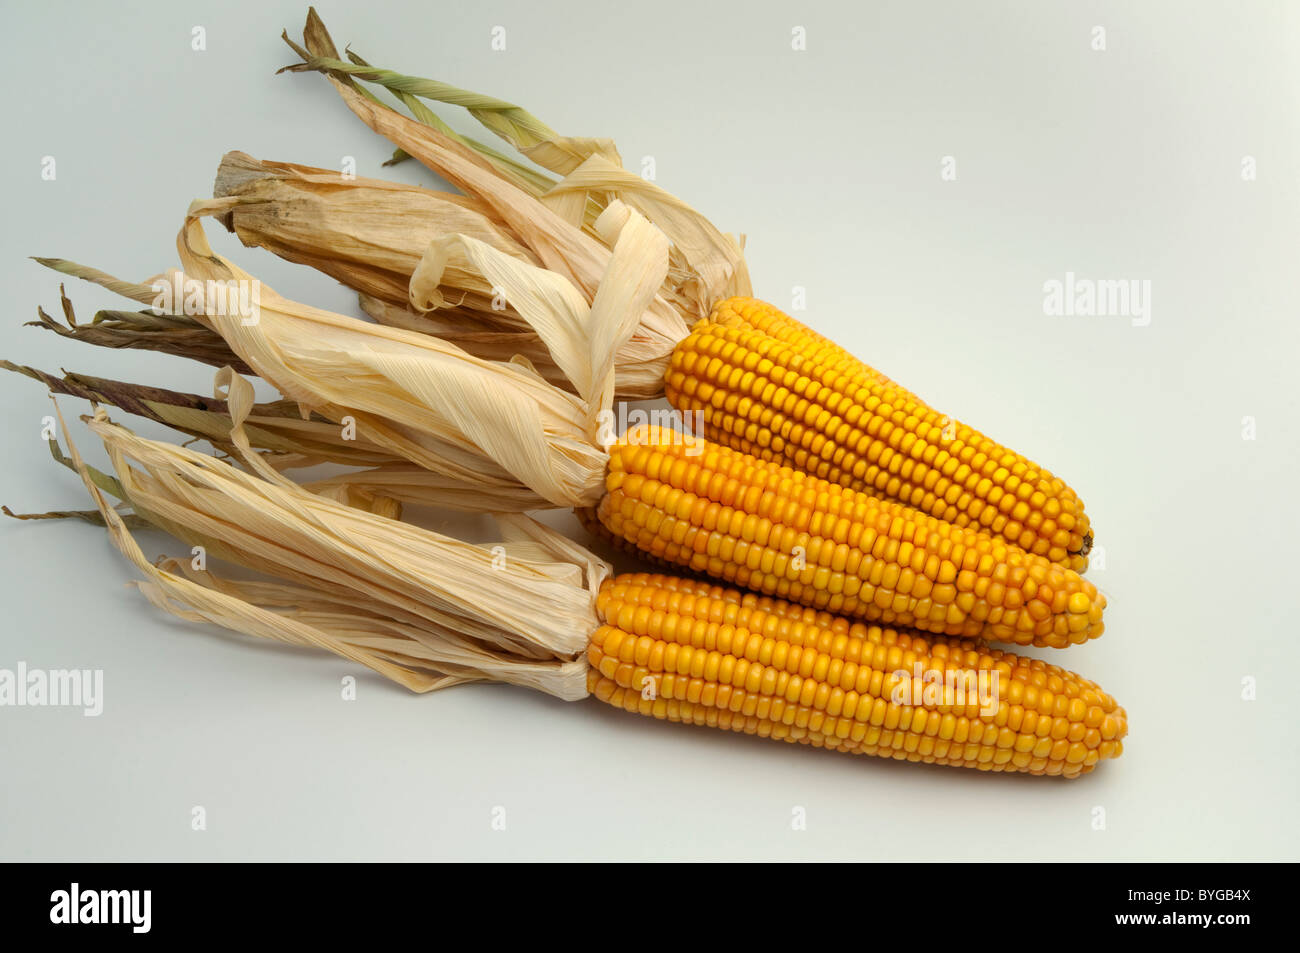 Maize, Corn (Zea mays). Ripe corncobs. Studio picture against a white background. Stock Photo